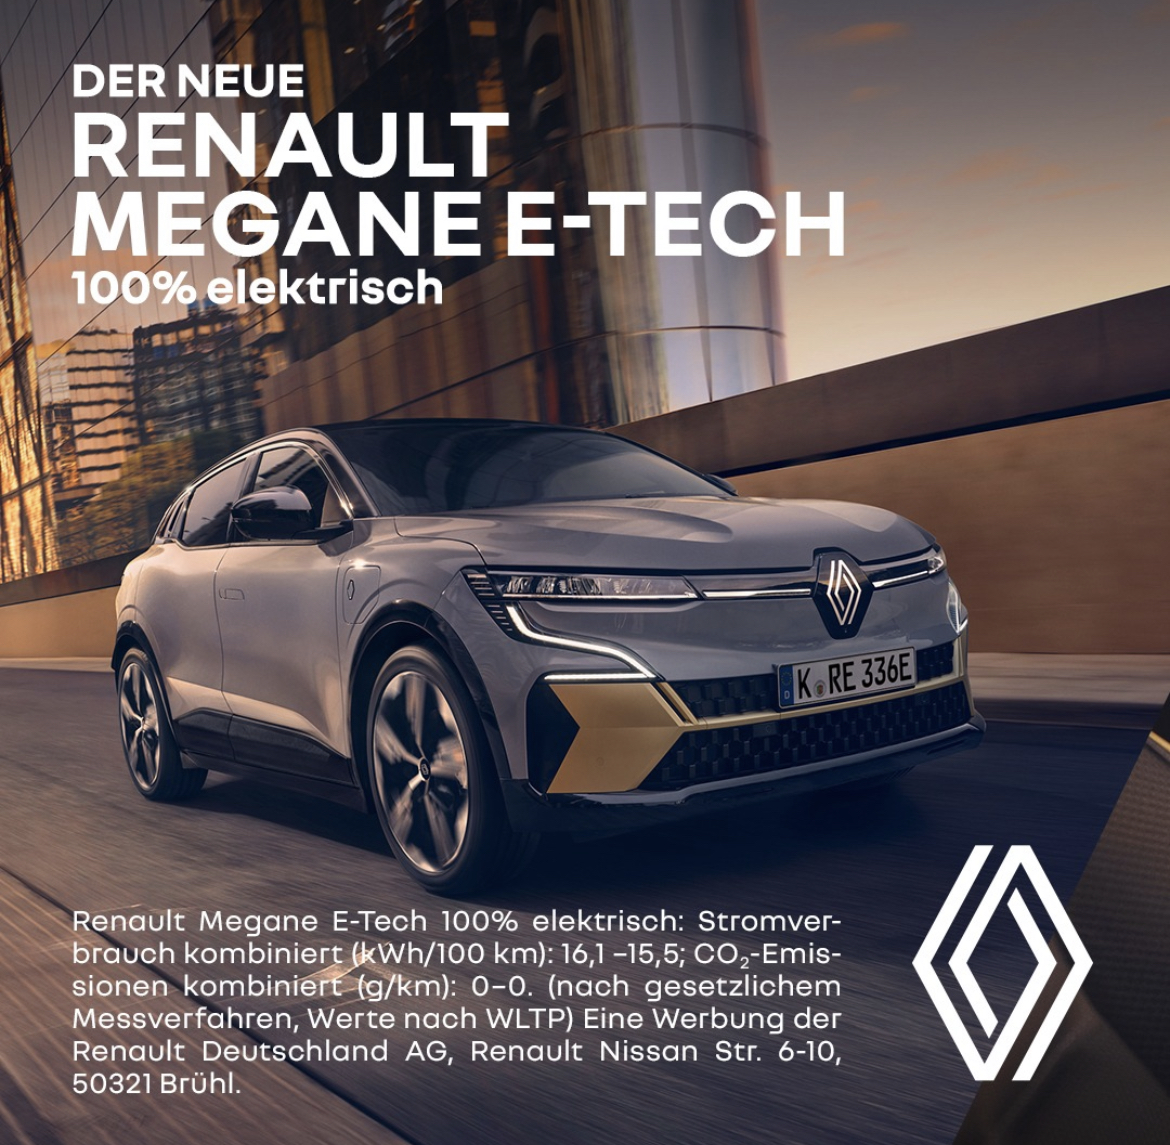 Der Renault Megane E-Tech 100 % elektrisch